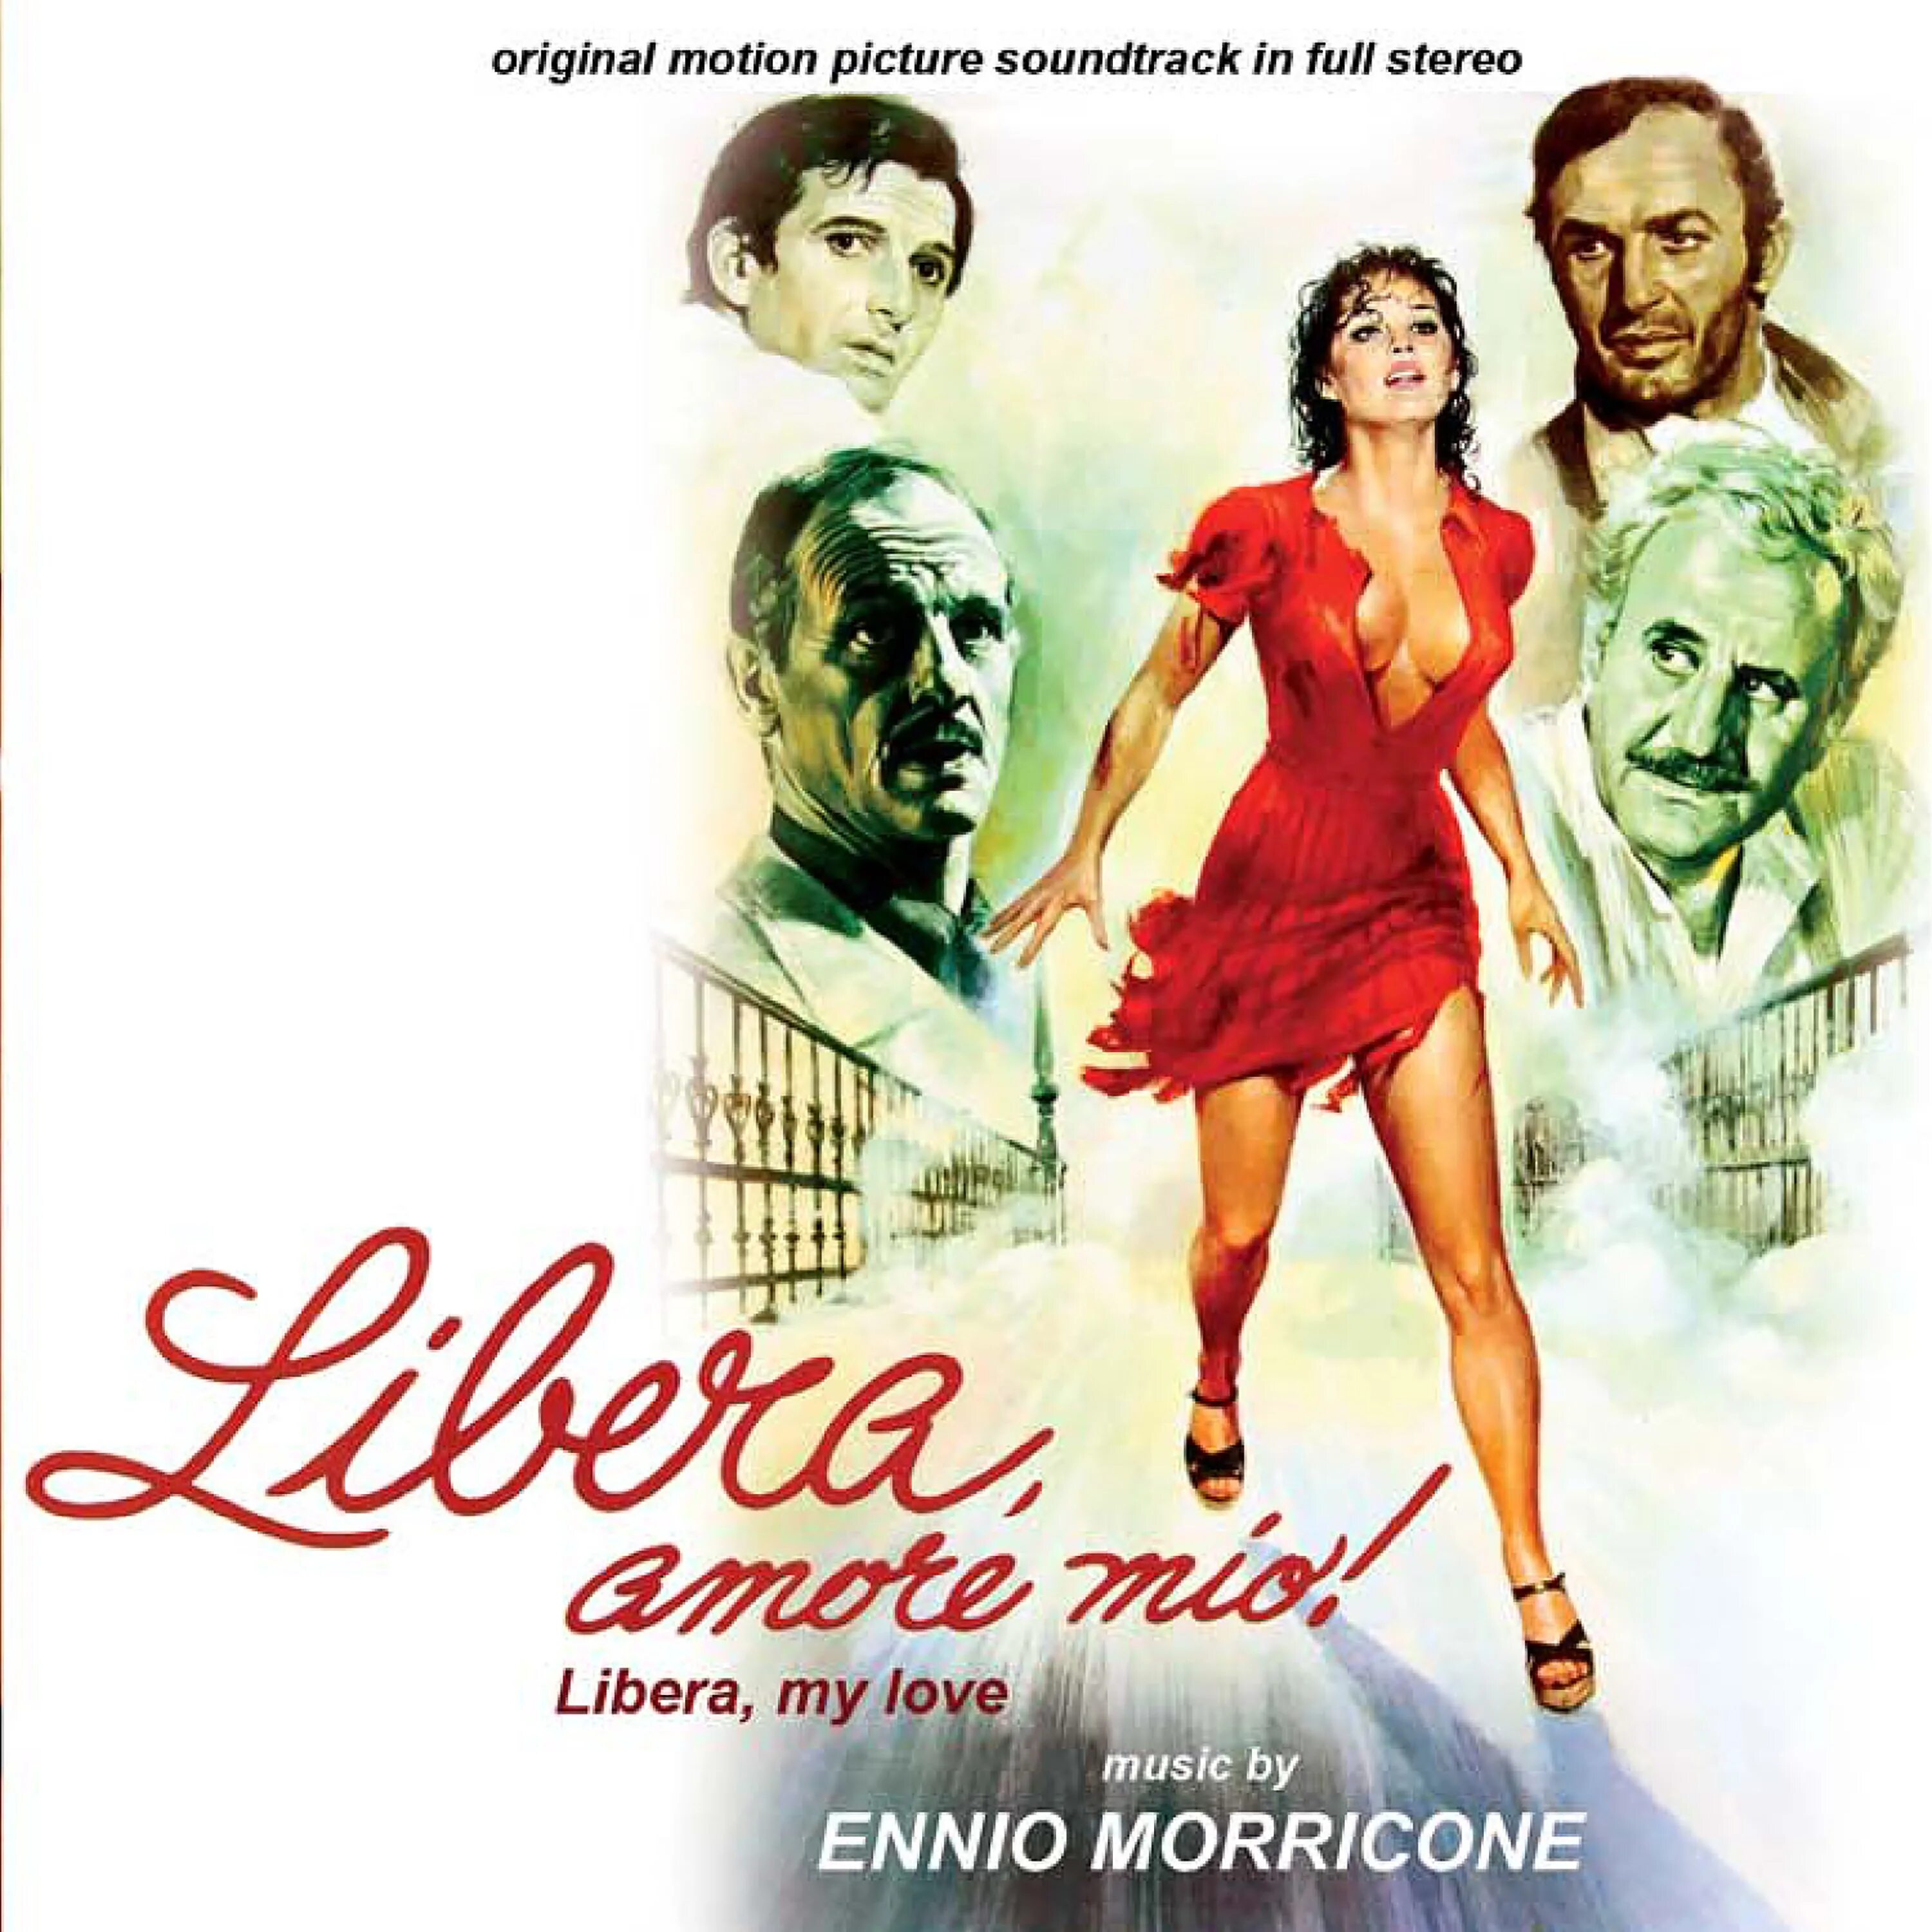 Amore mio mp3. Кугинетта, Amore mio! (1976). Постер Либера любовь моя (1975).